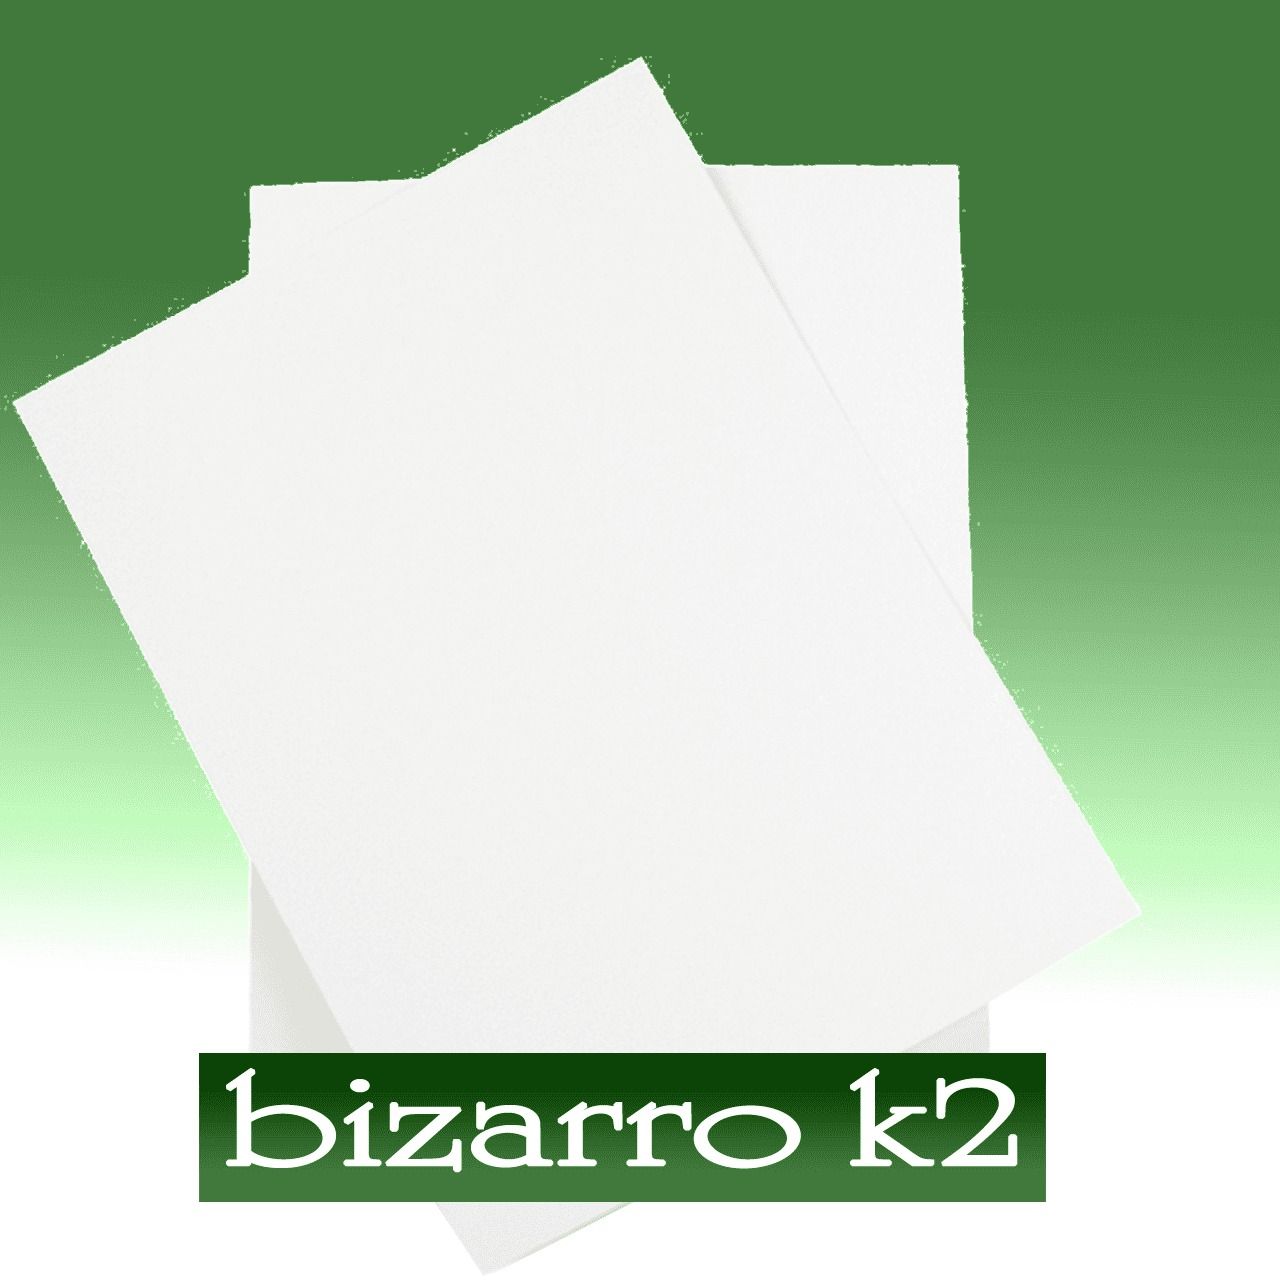 How to Order Bizarro Liquid K2 Spray on Paper